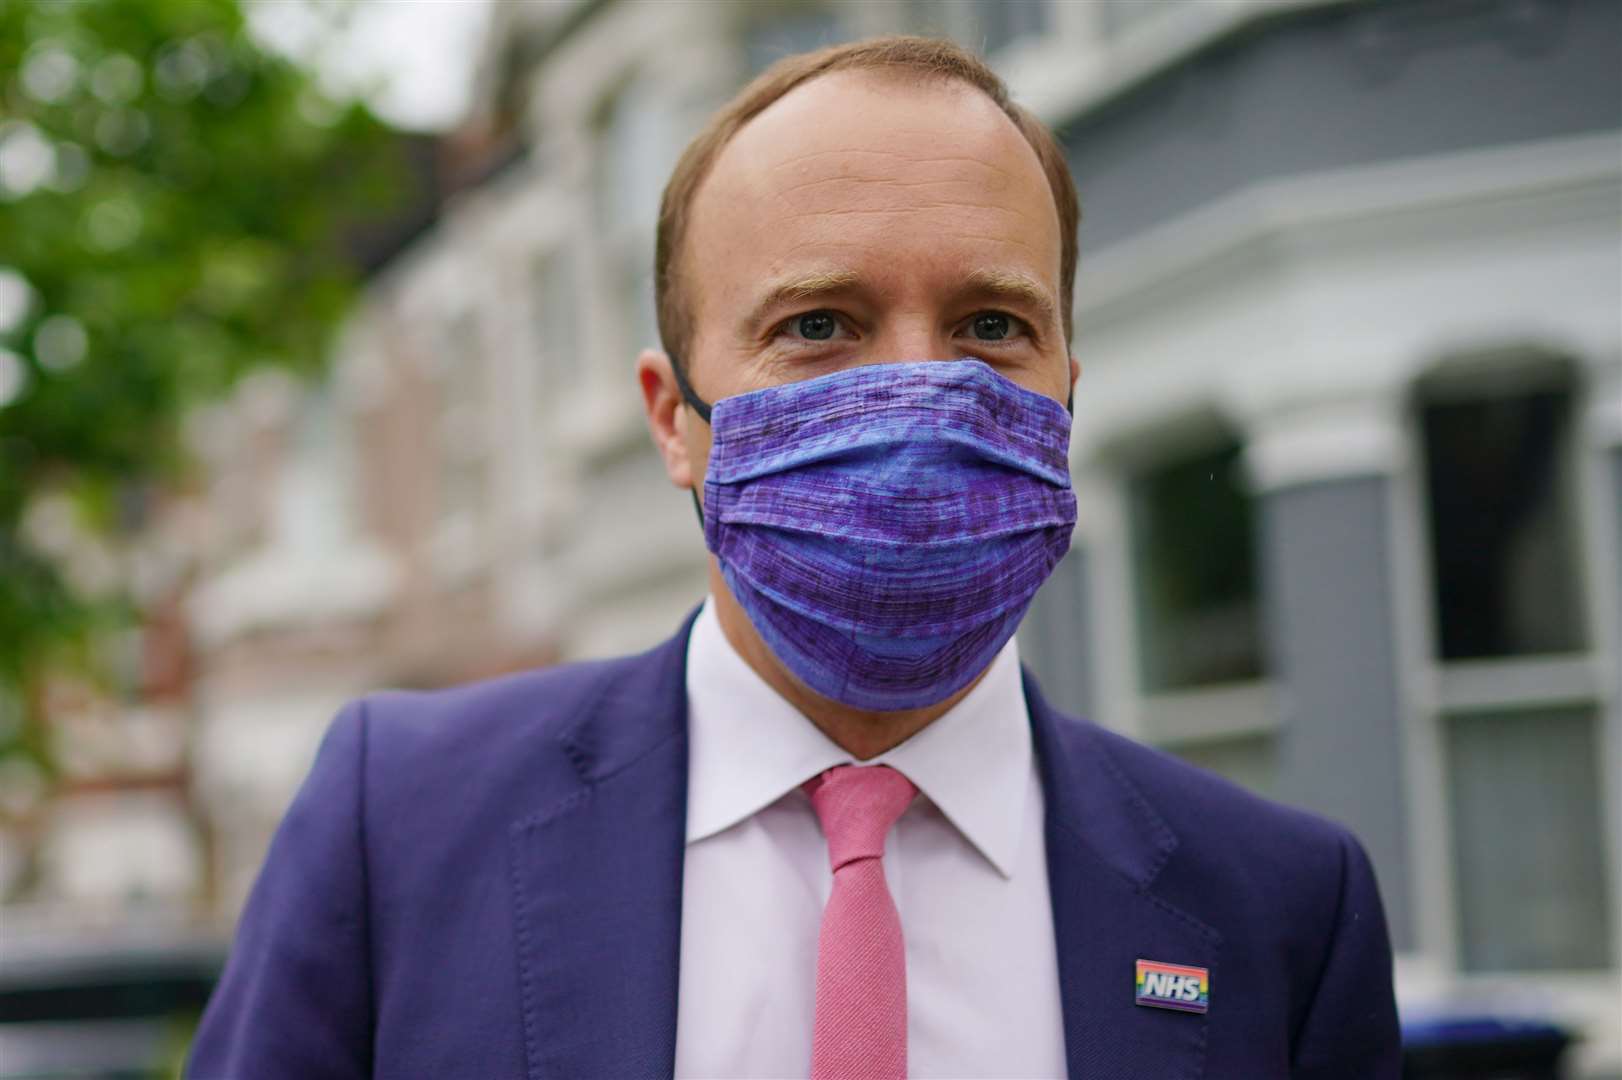 Matt Hancock as health secretary during the pandemic (Aaron Chown/PA)